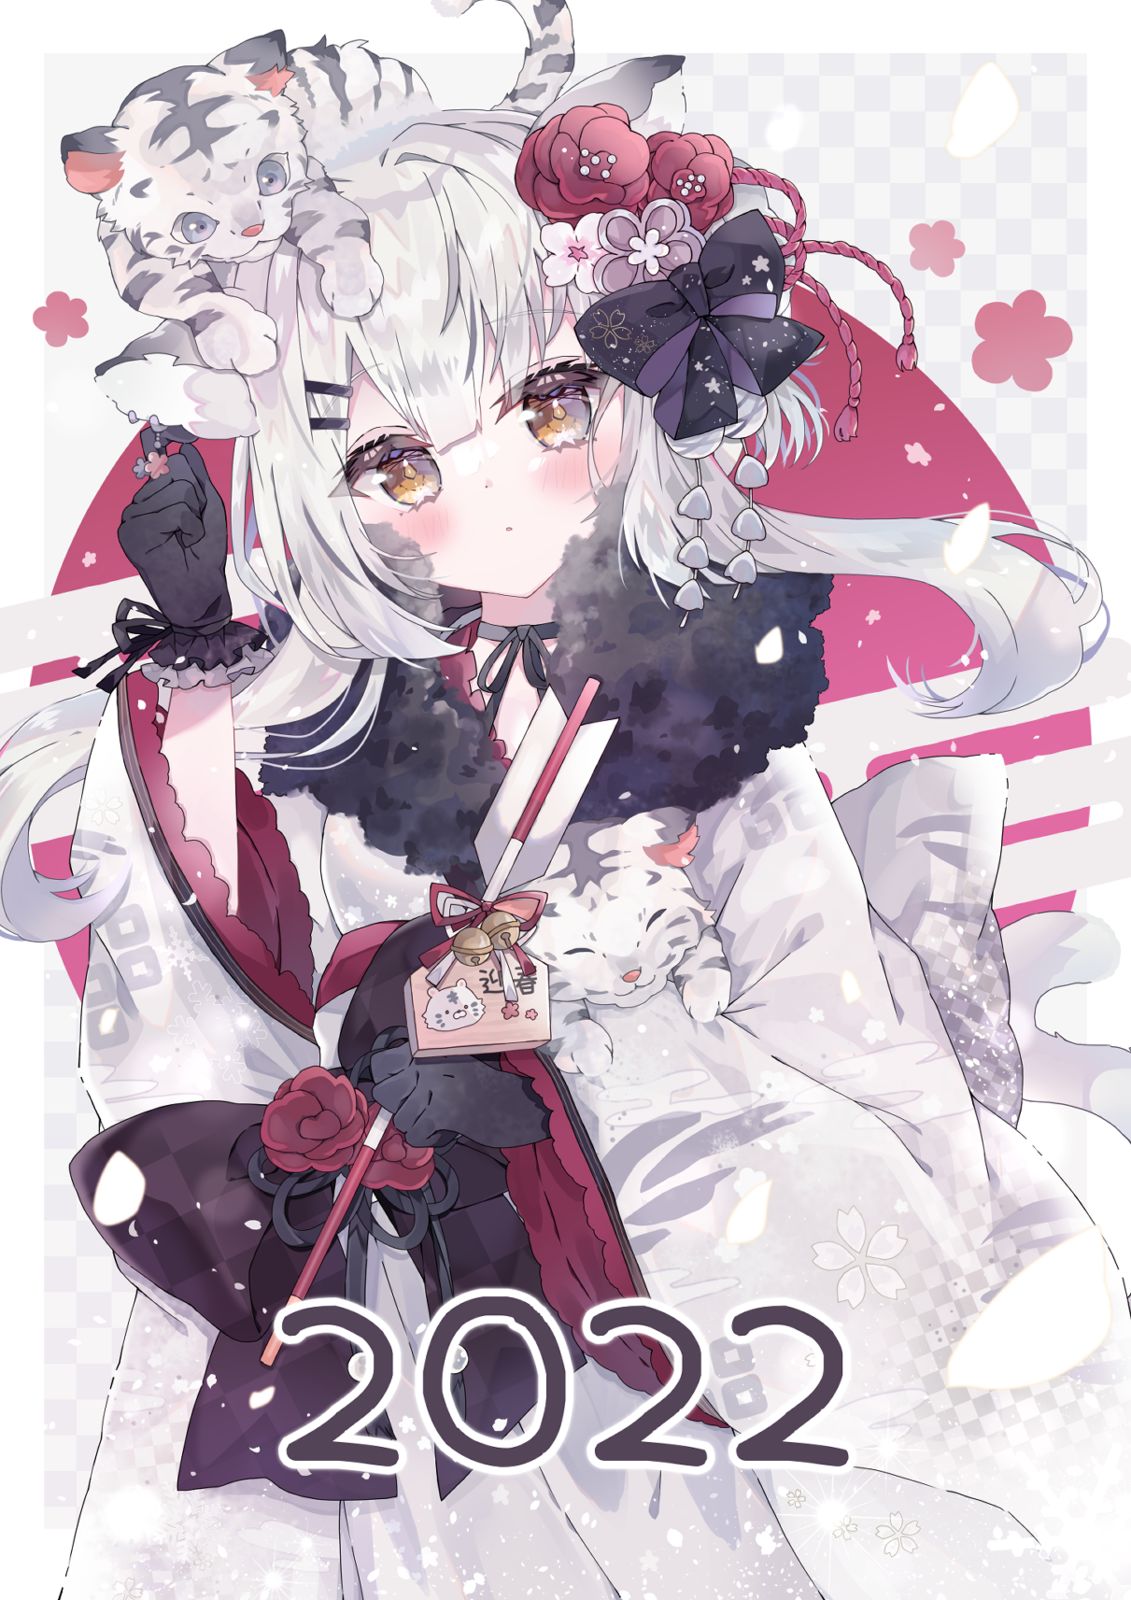 HAPPY NEW YEAR 2022〜 插画图片壁纸